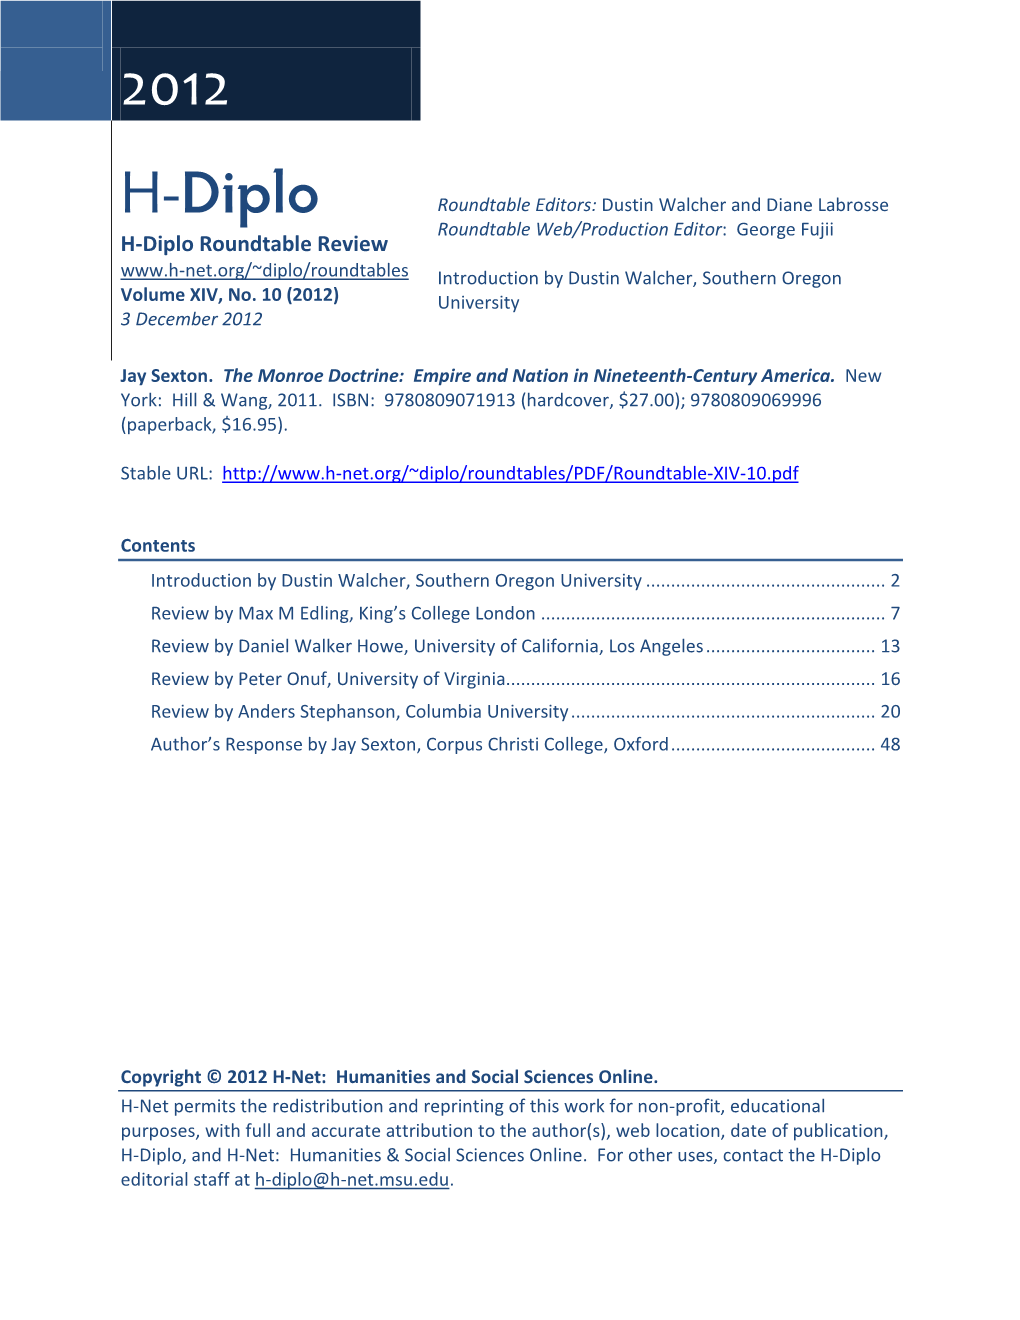 H-Diplo Roundtables, Vol. XIV, No. 10